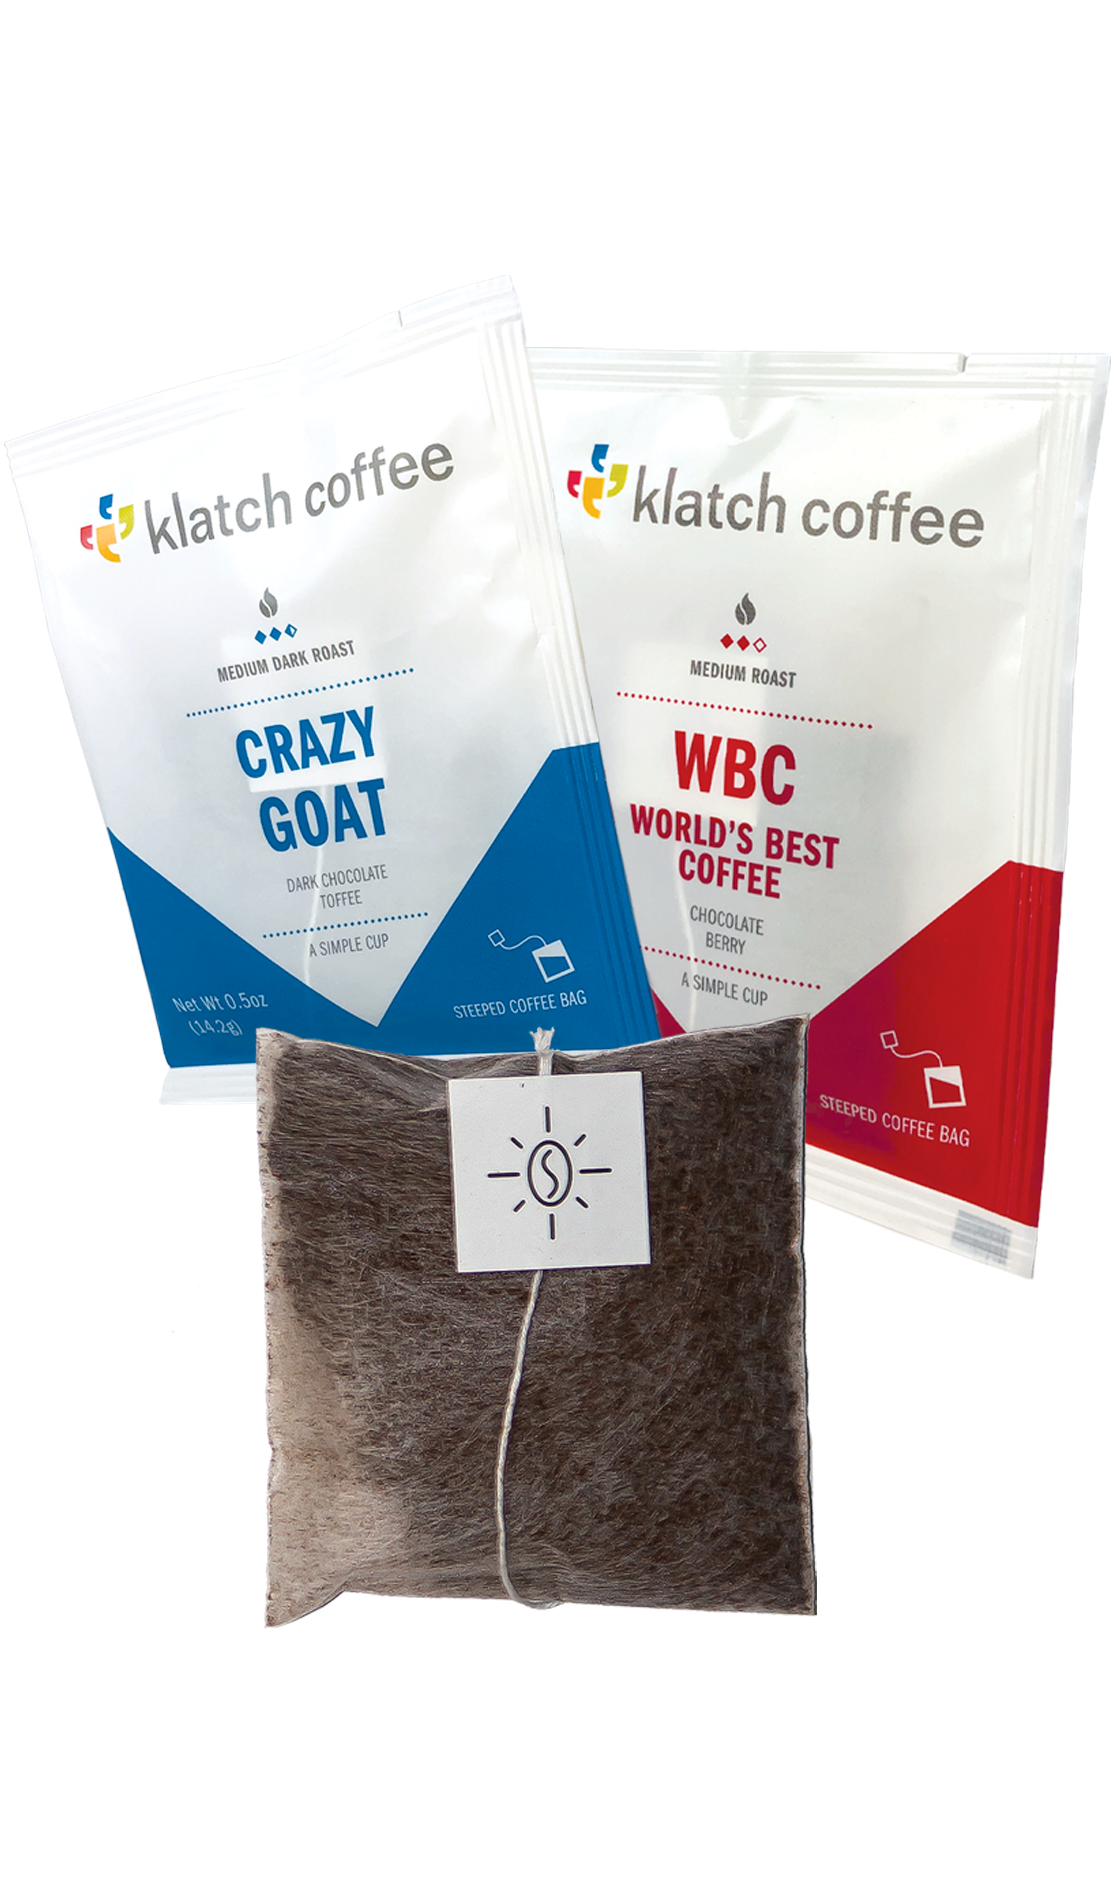 Klatch Steeped Single Serve Coffee